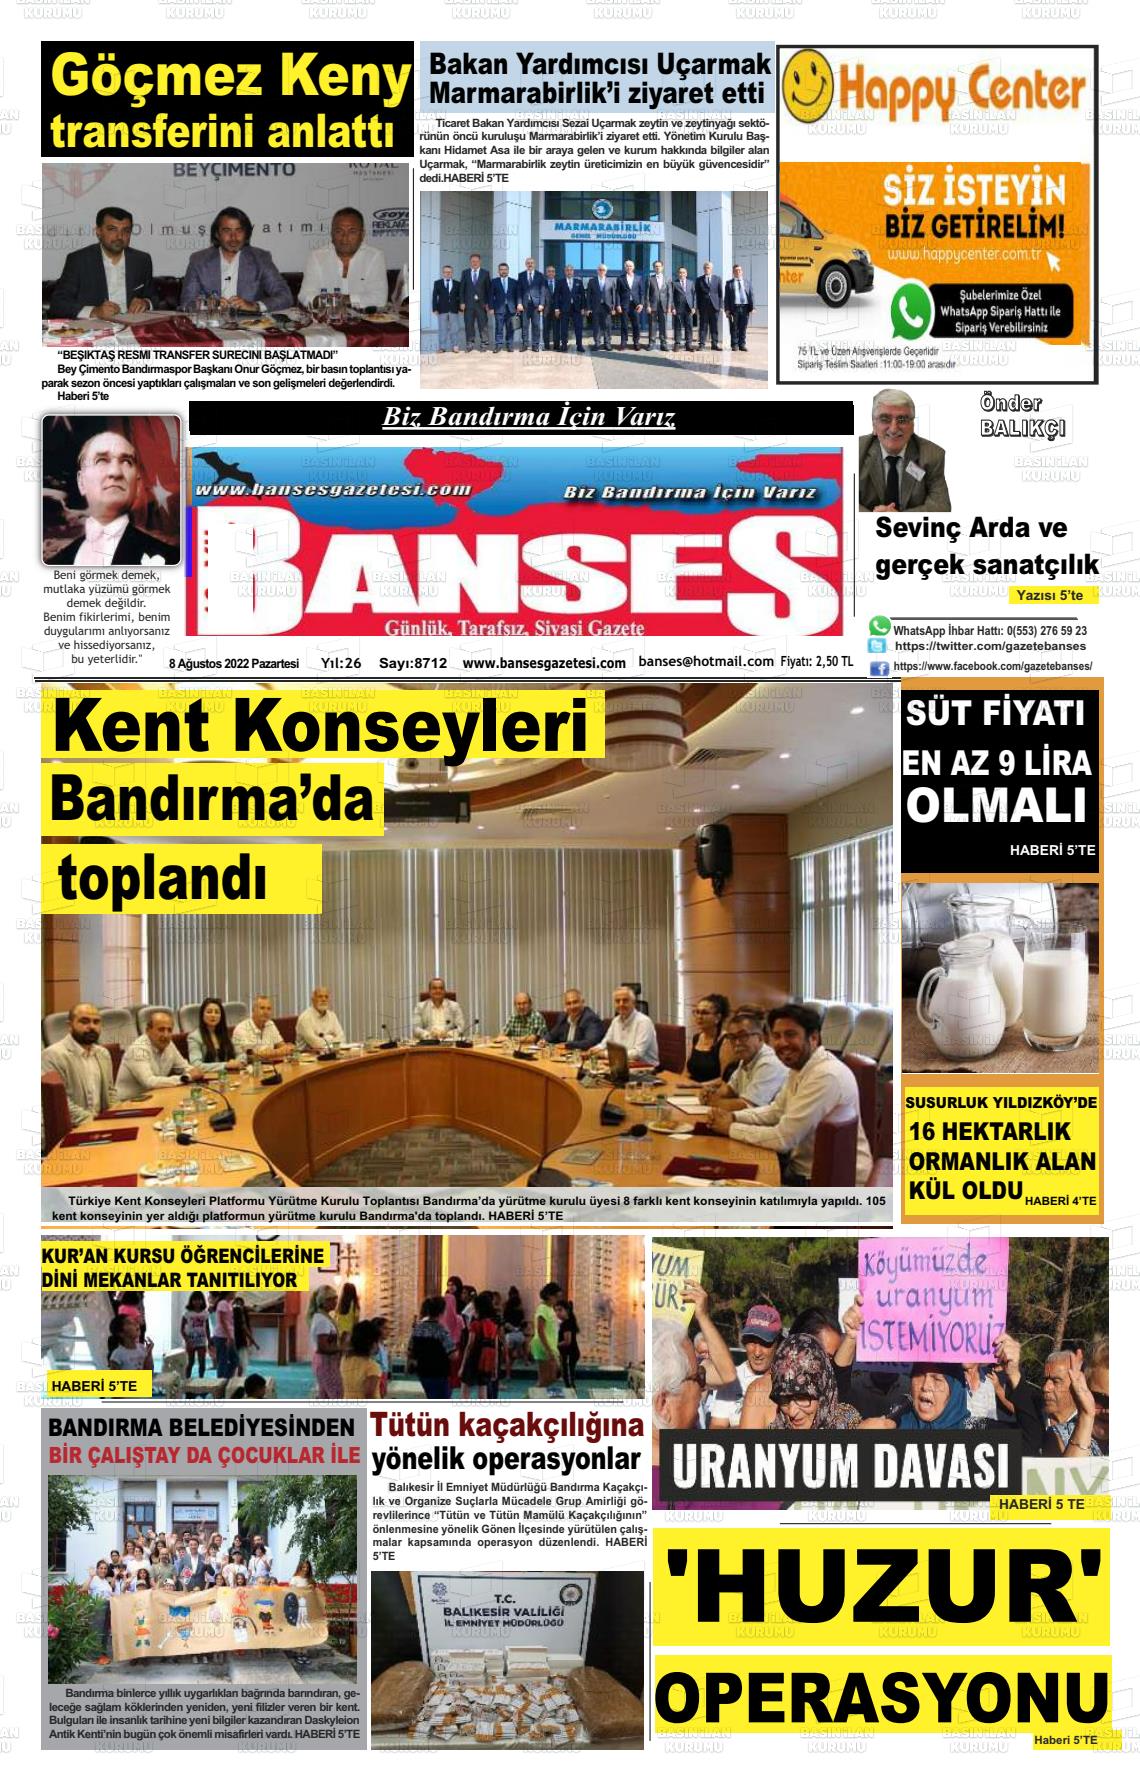 08 Ağustos 2022 Banses Gazete Manşeti